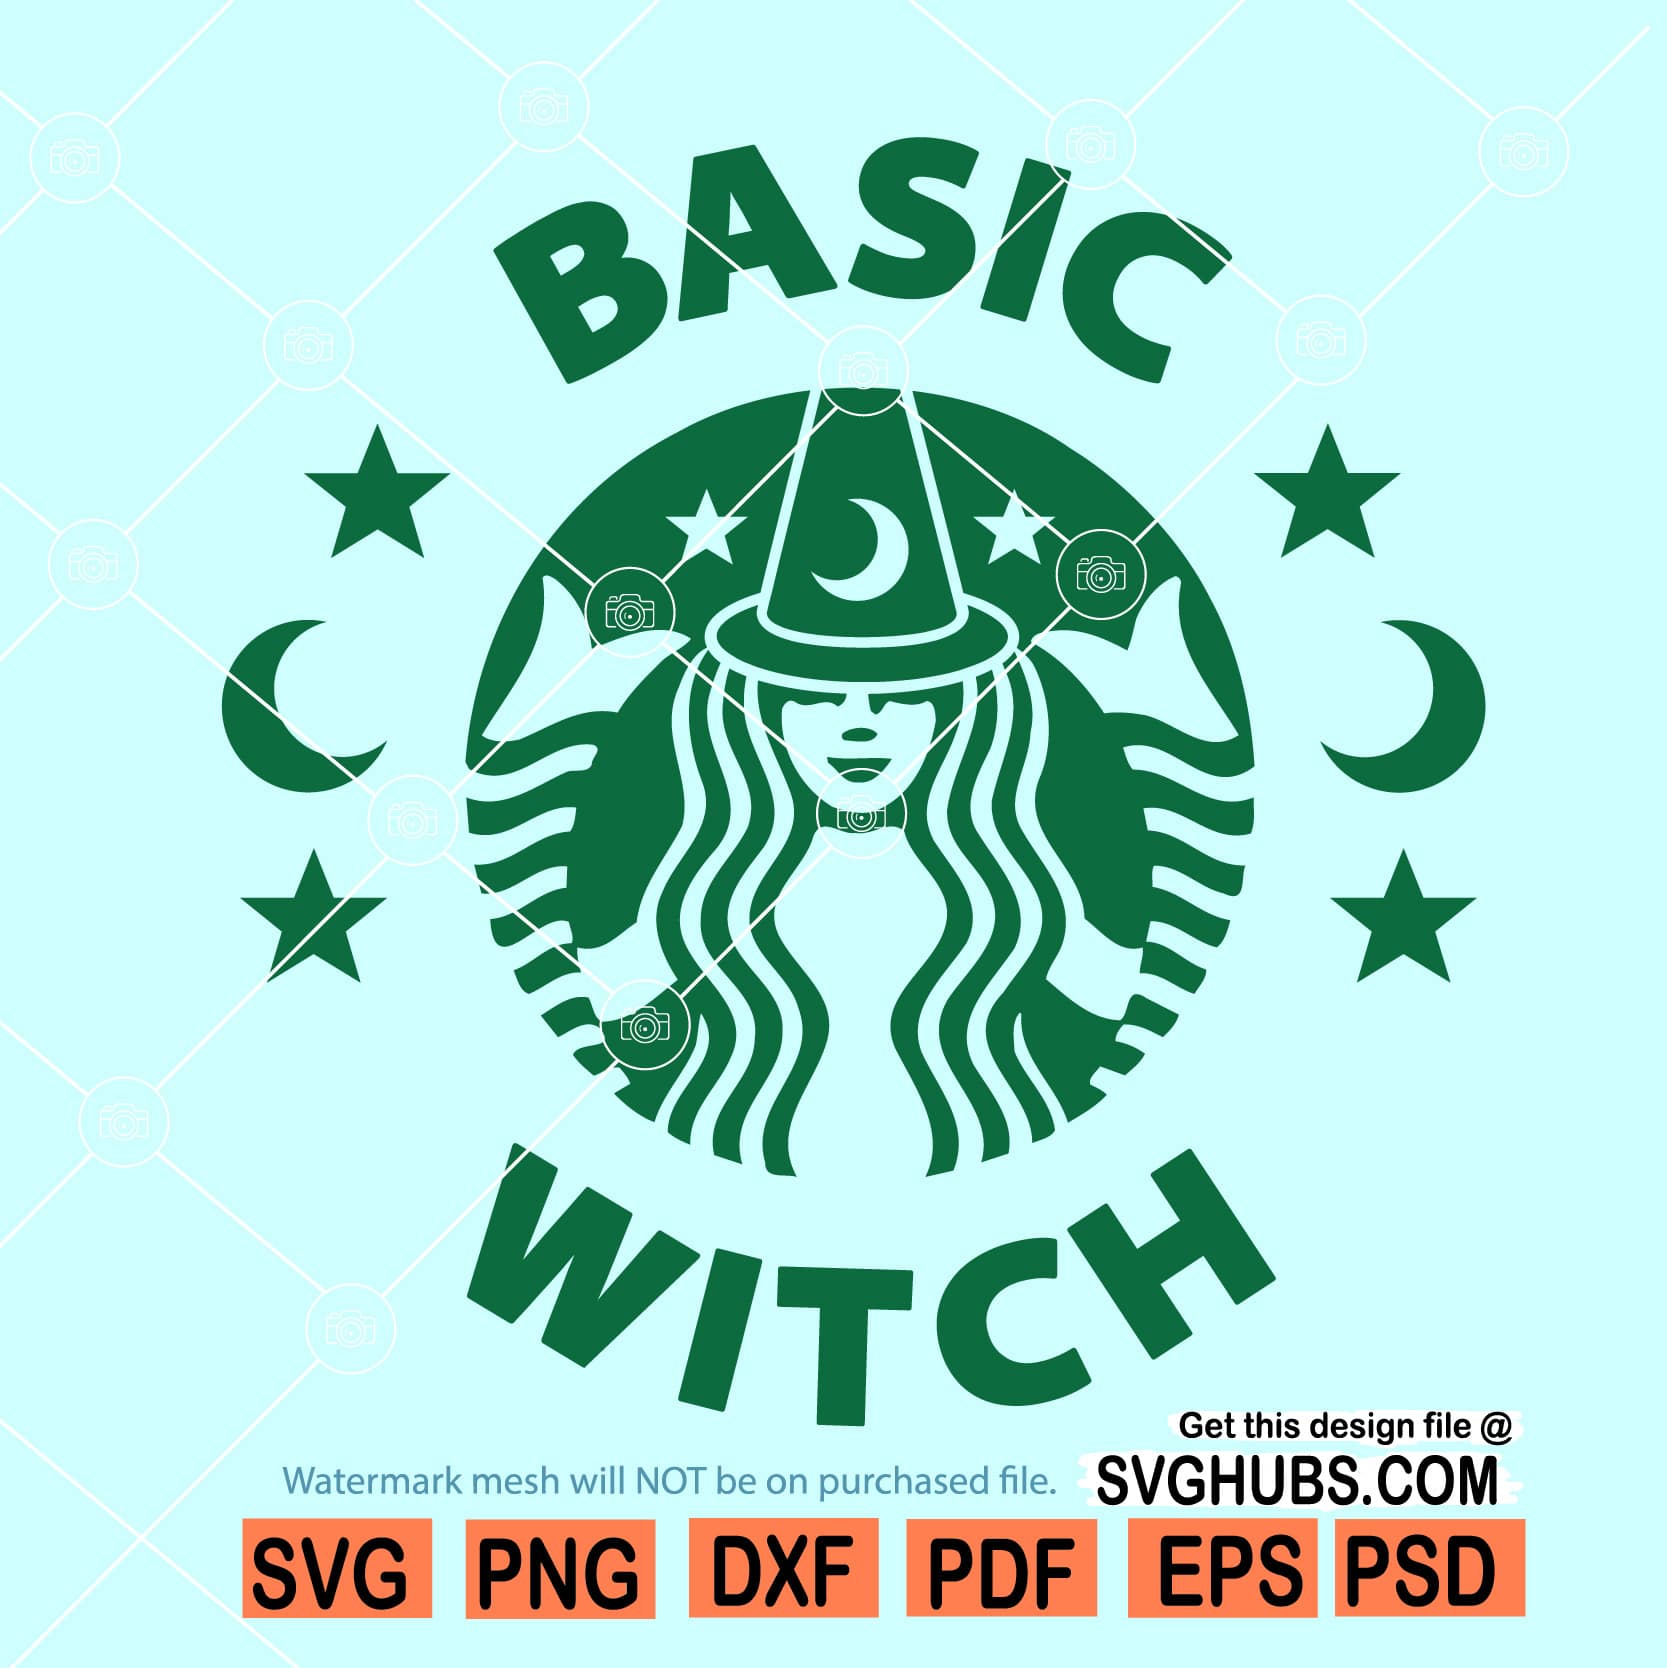 Basic Witch Logo Svg, Basic Witch Svg, Hocus Pocus Goth Svg, Coffee Svg